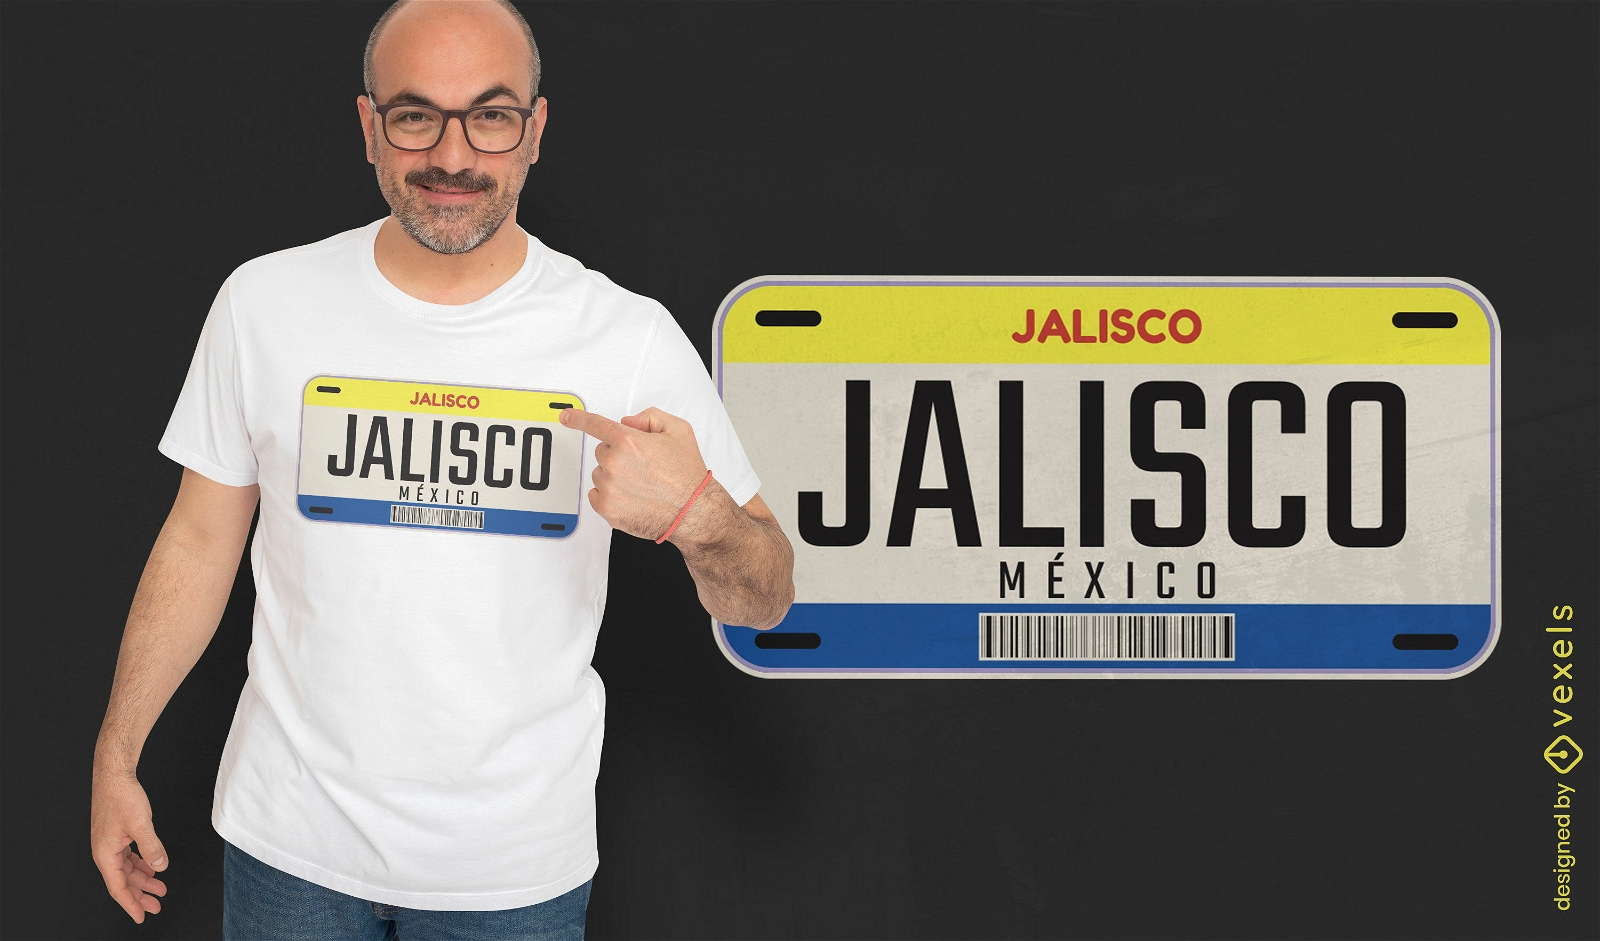 Mexico Jalisco city license plate t-shirt design